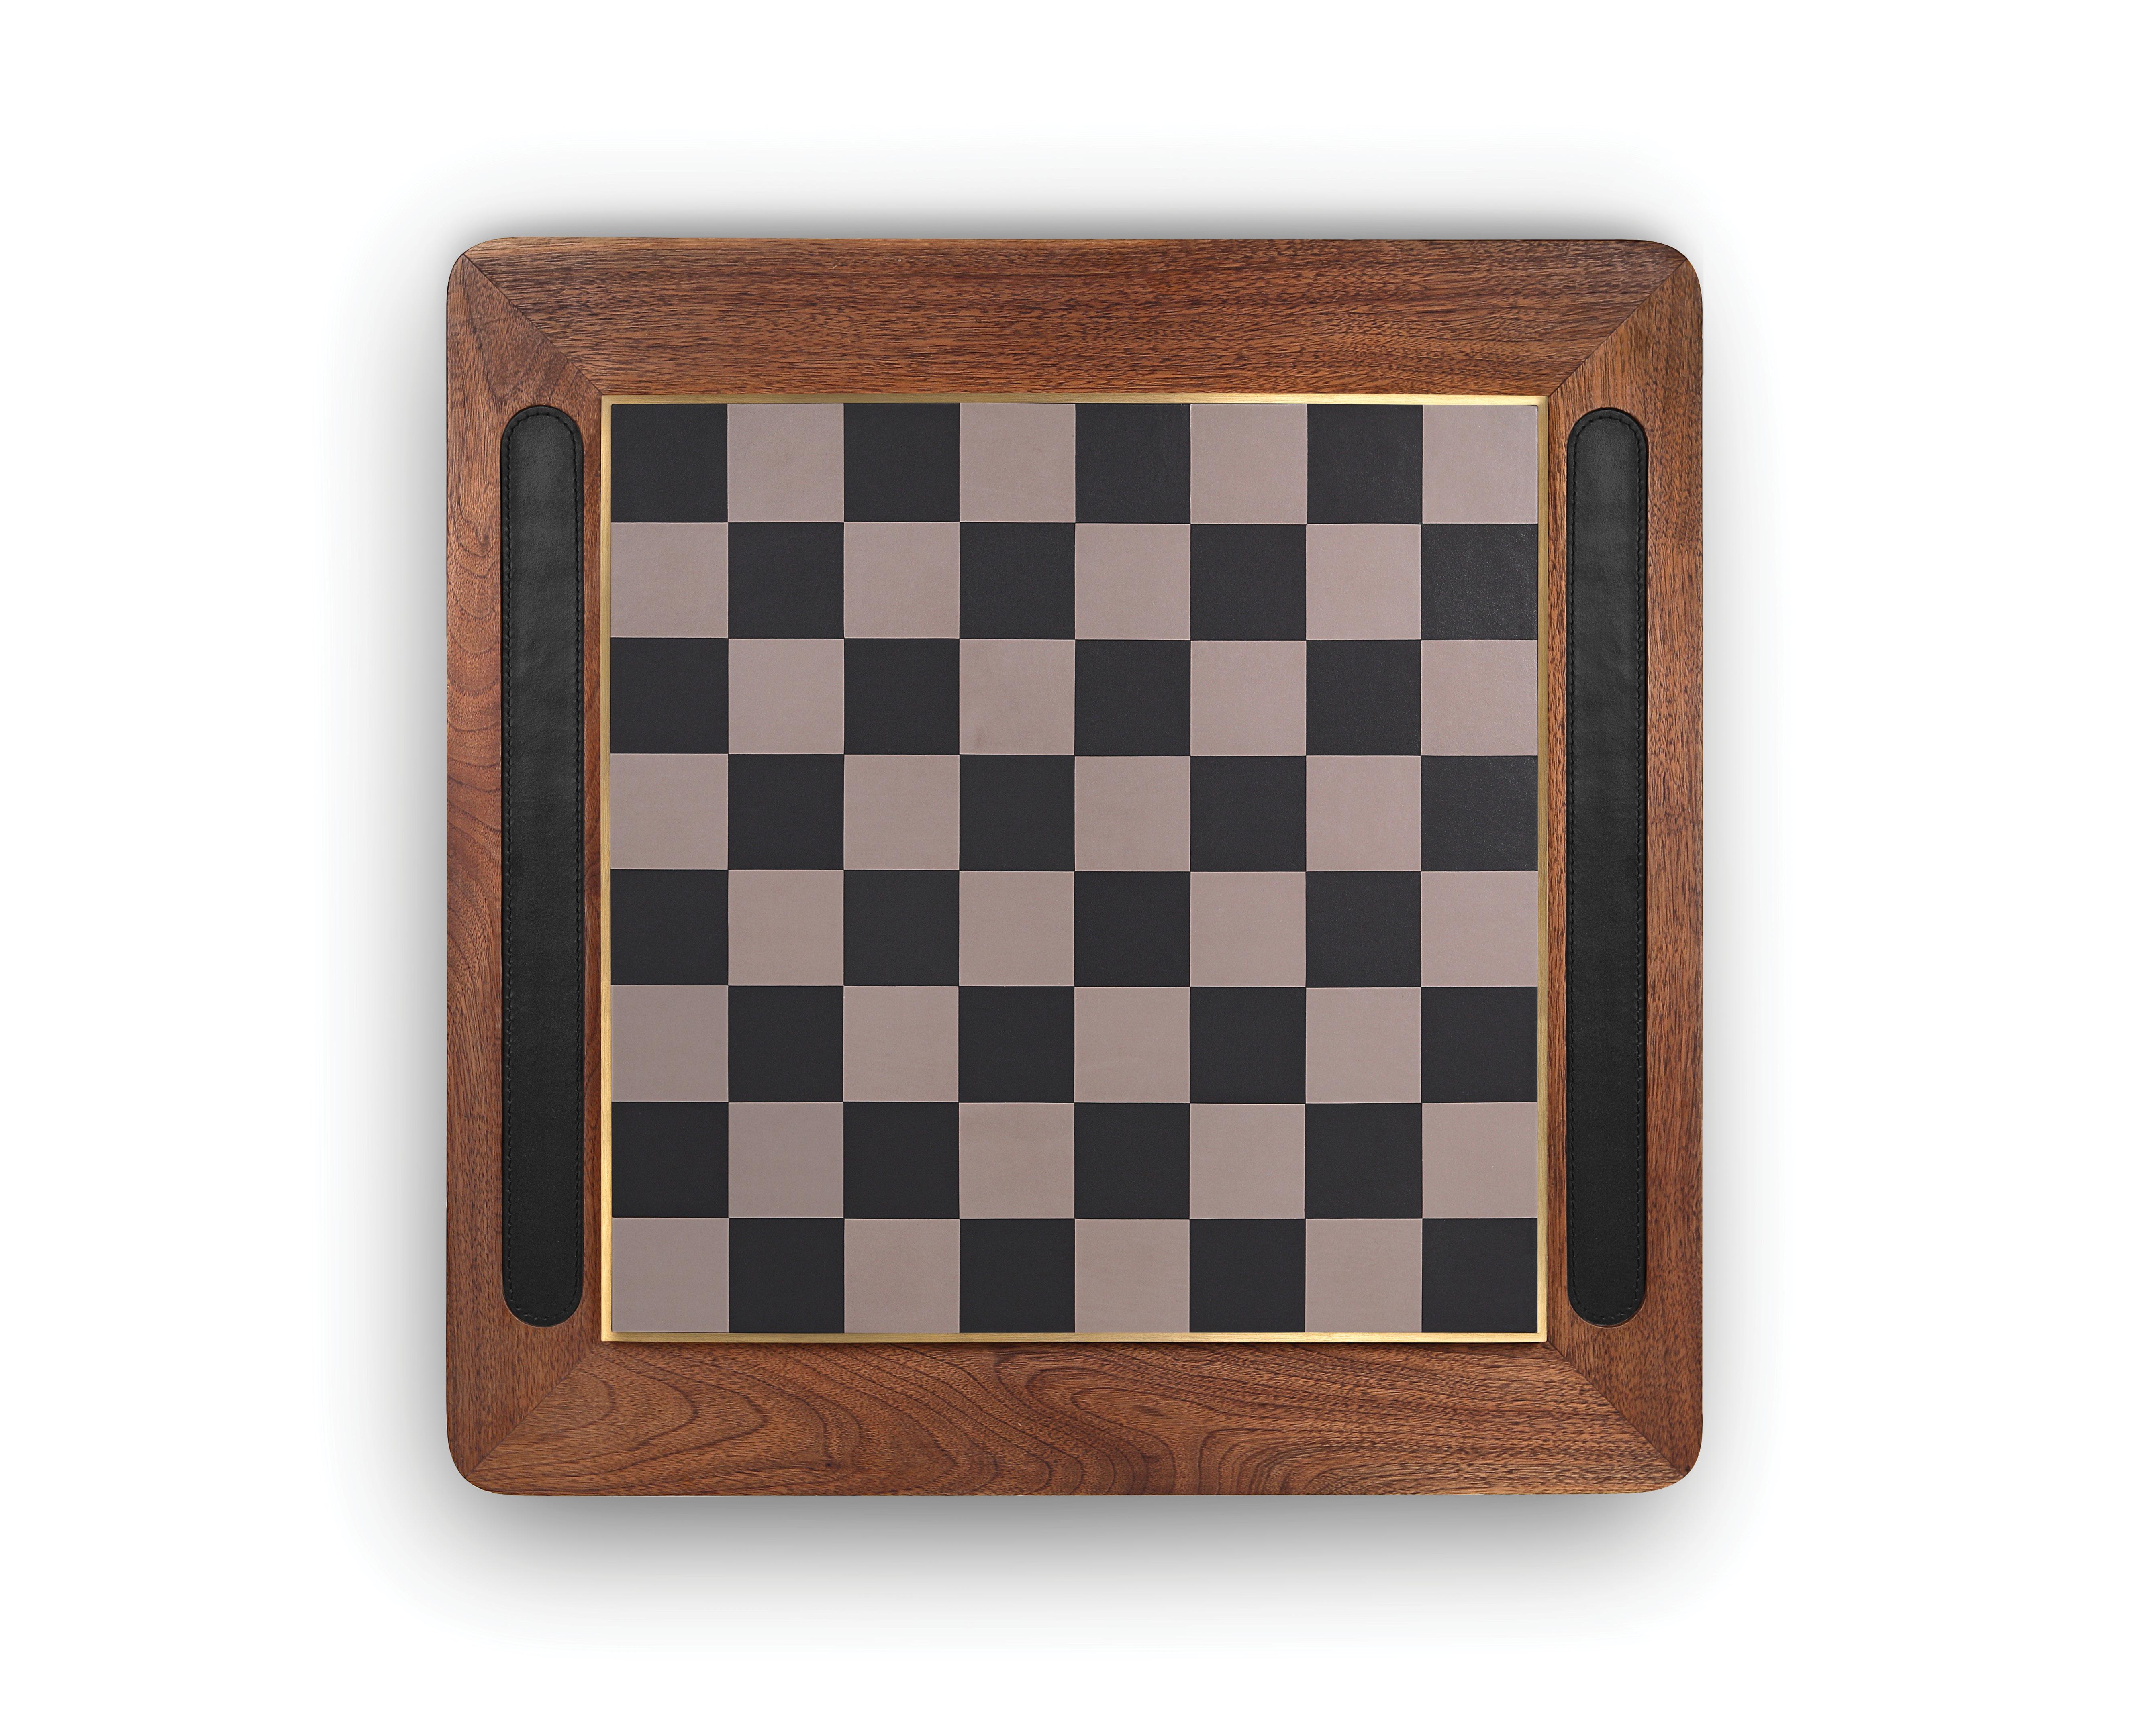 Indian 3L Shatranj Chess Set by Madheke For Sale